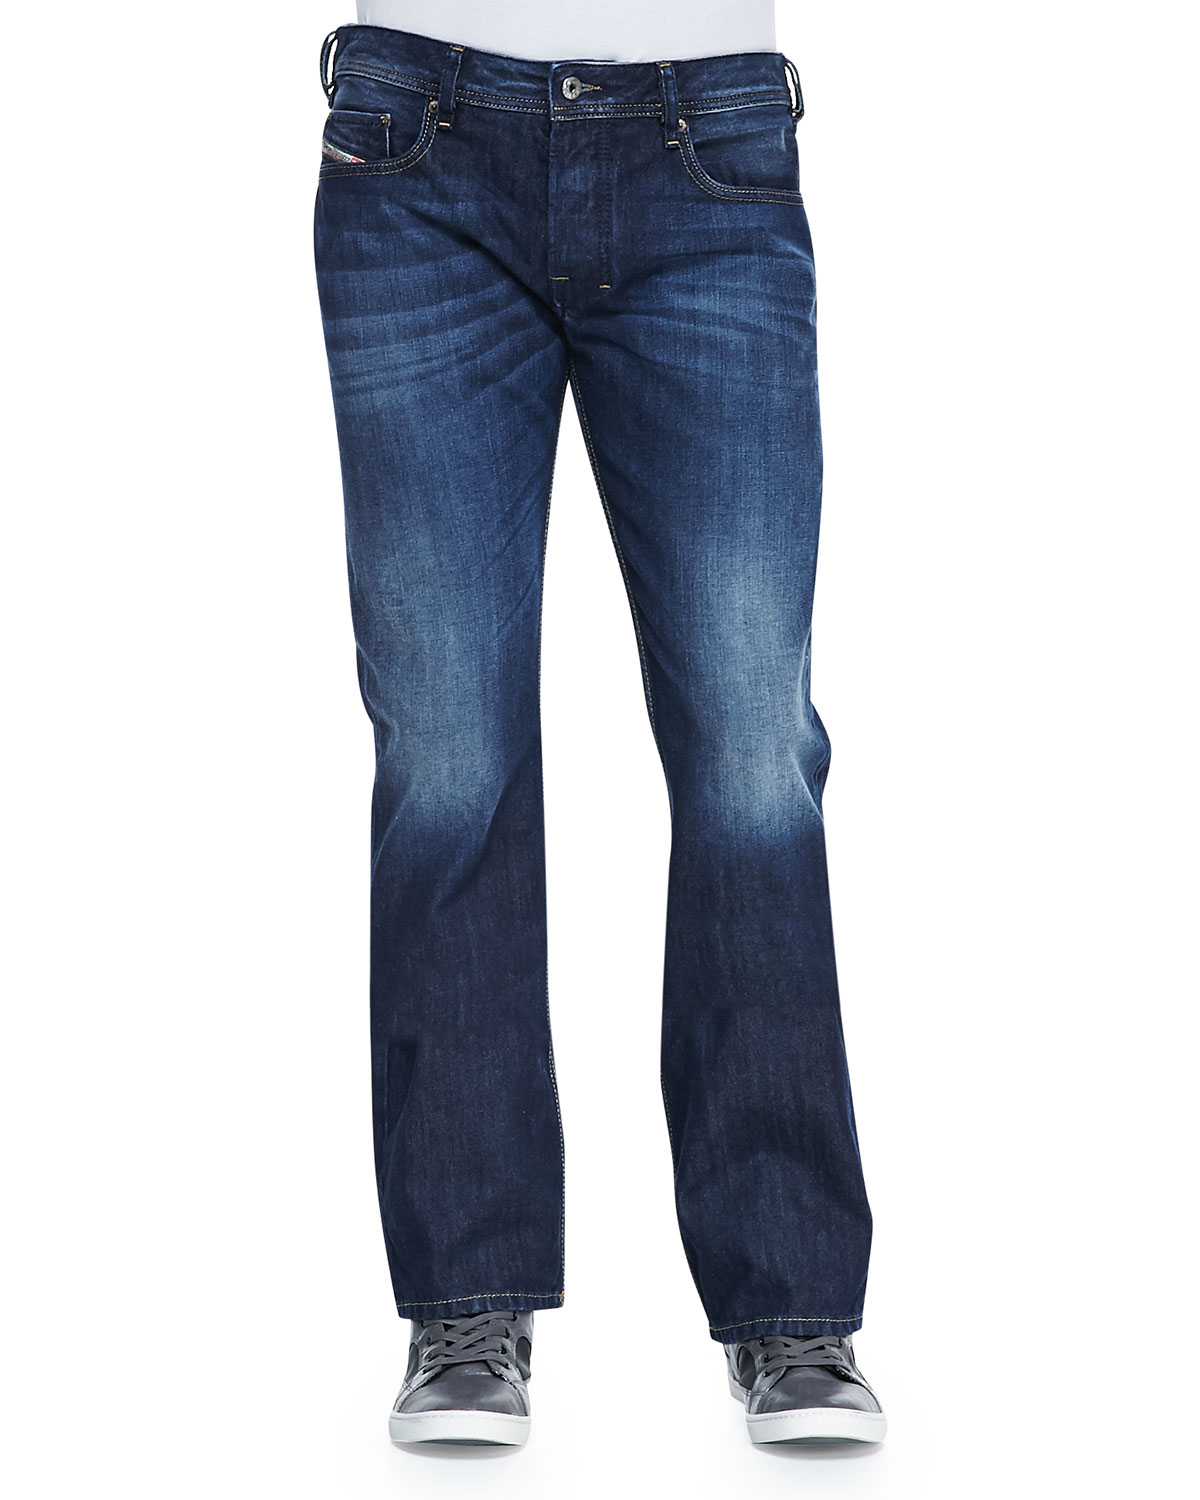 Lyst - Diesel Zatiny Key Indigo Jeans in Blue for Men